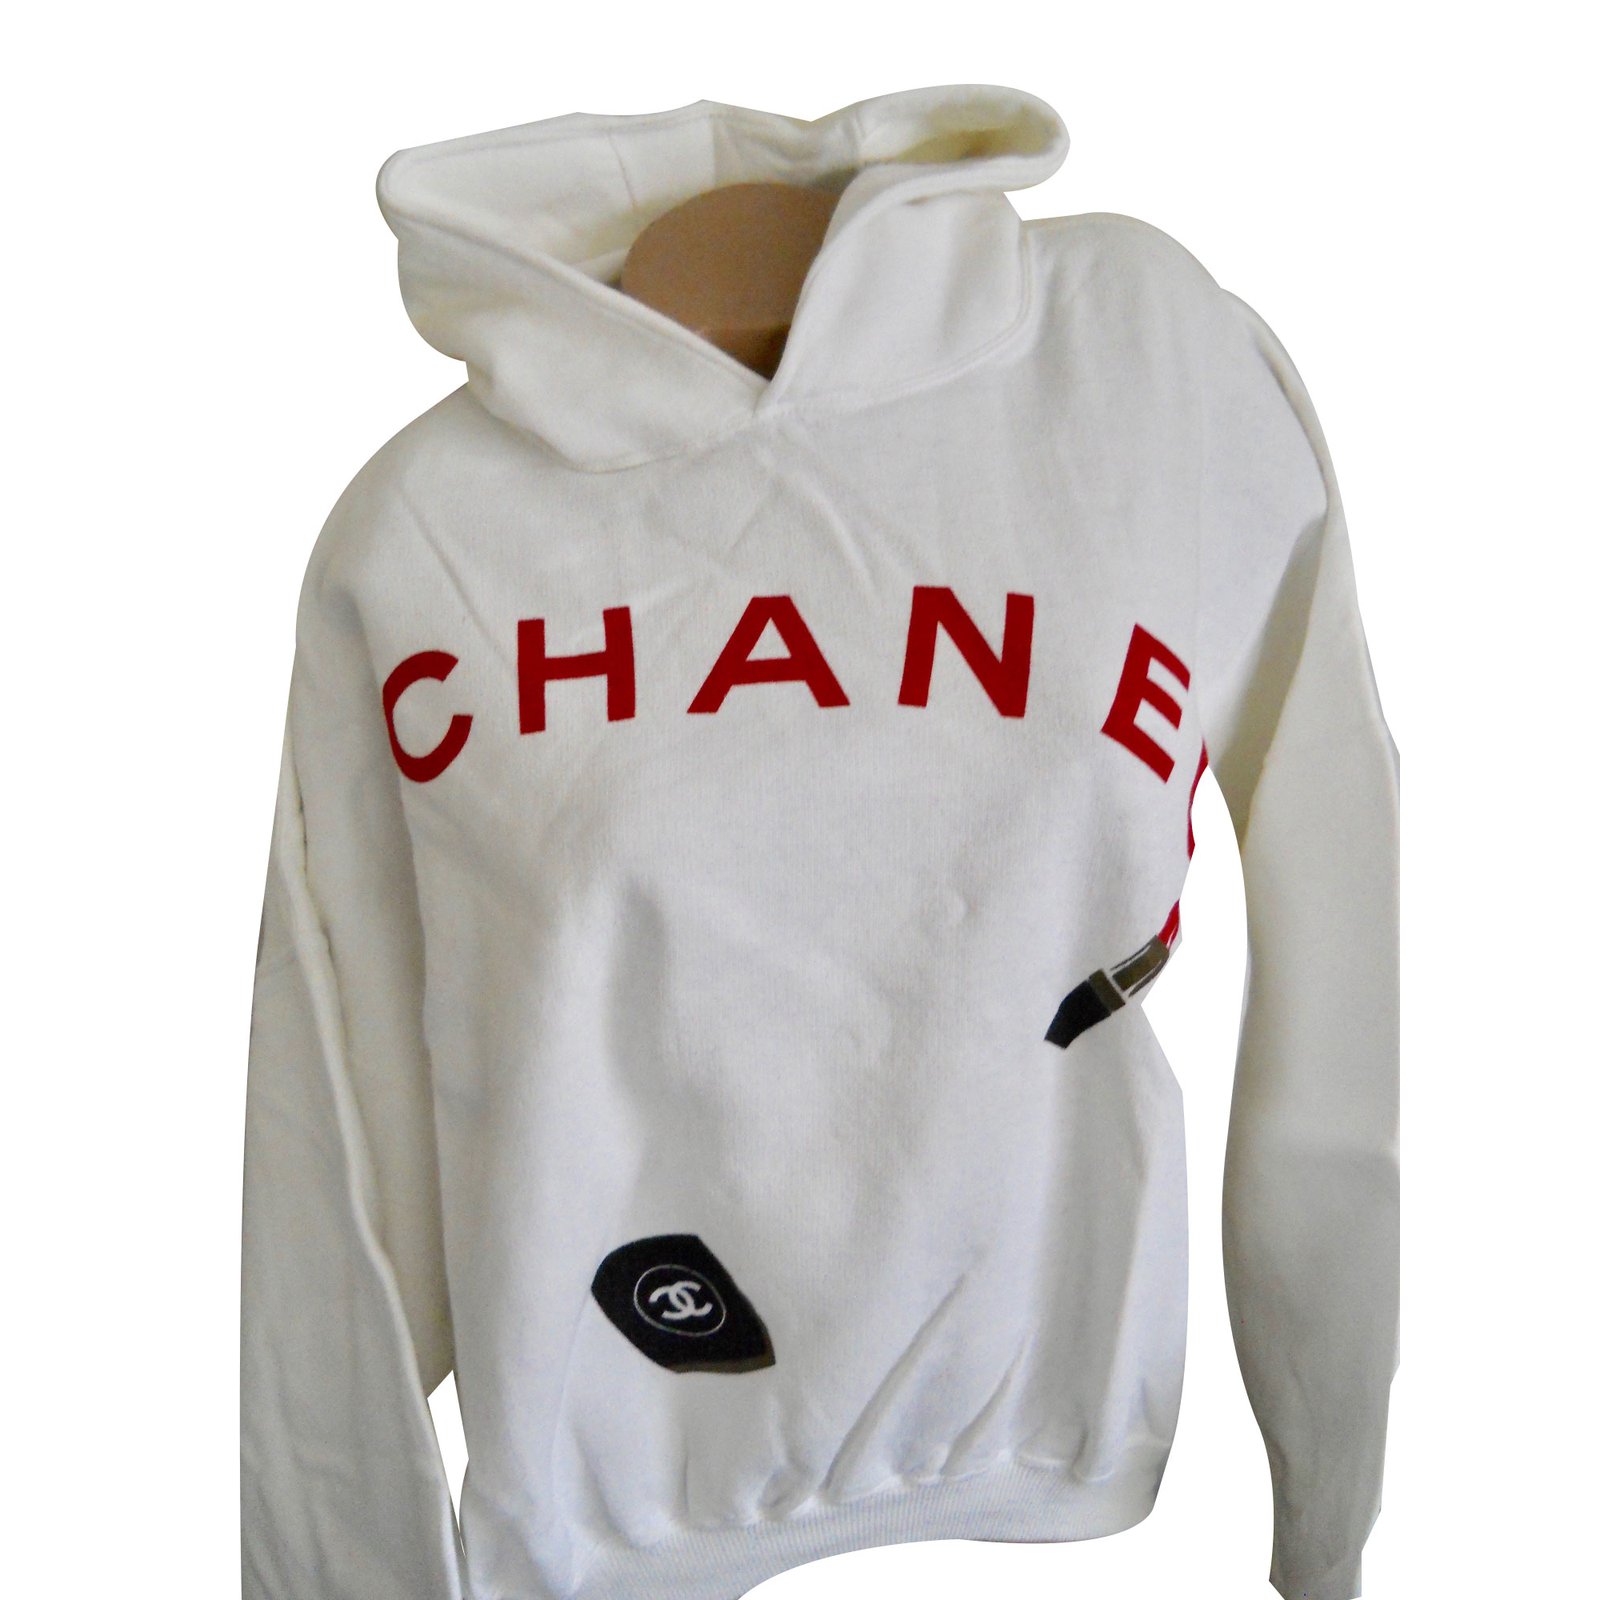 Chanel White Unisex Hoodie For Men Women Luxury Brand Clothing